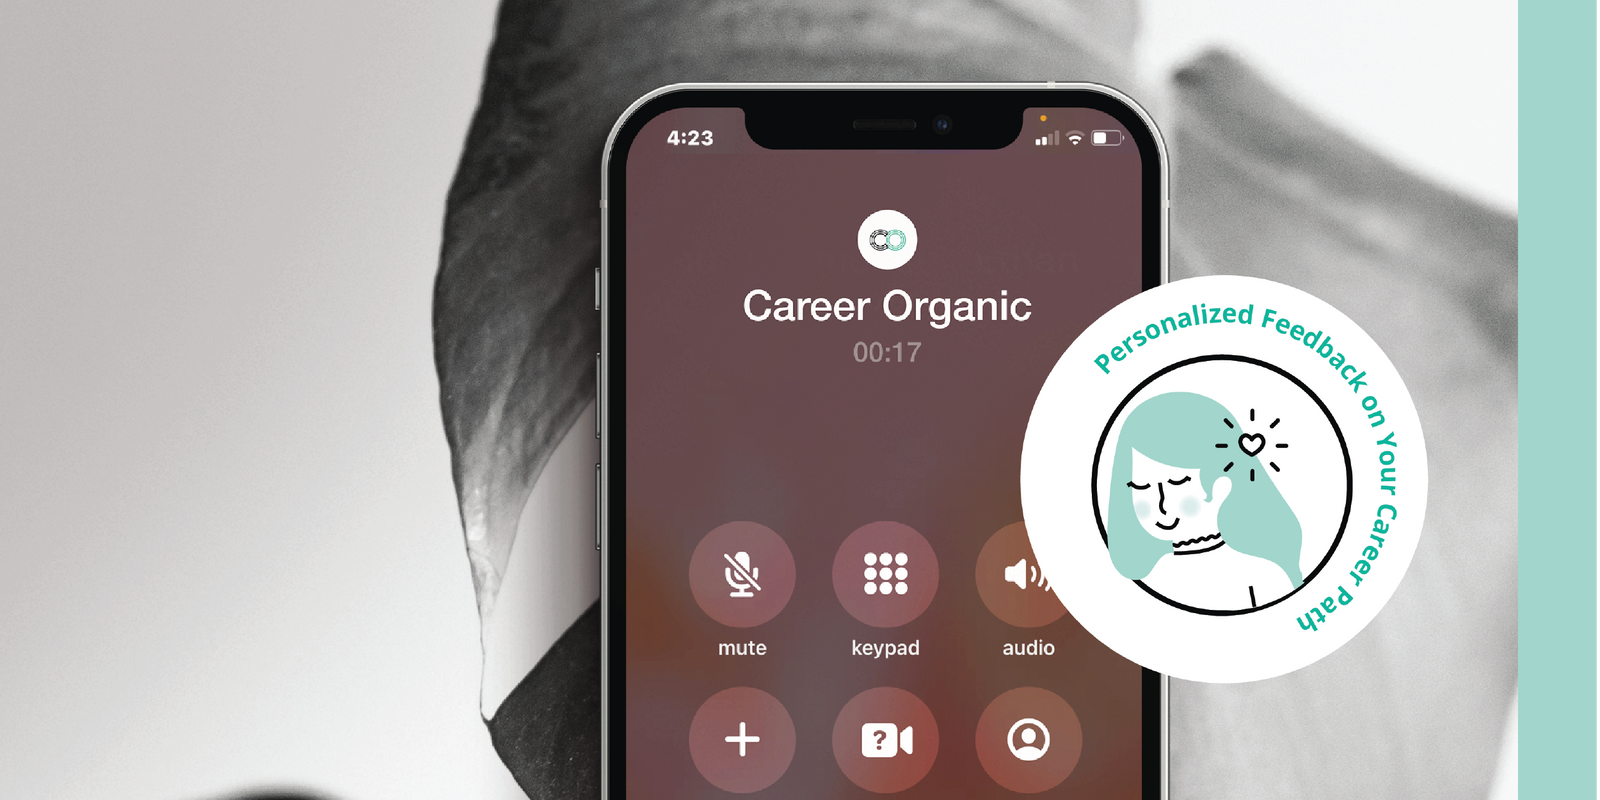 Phone call with Career Organic.